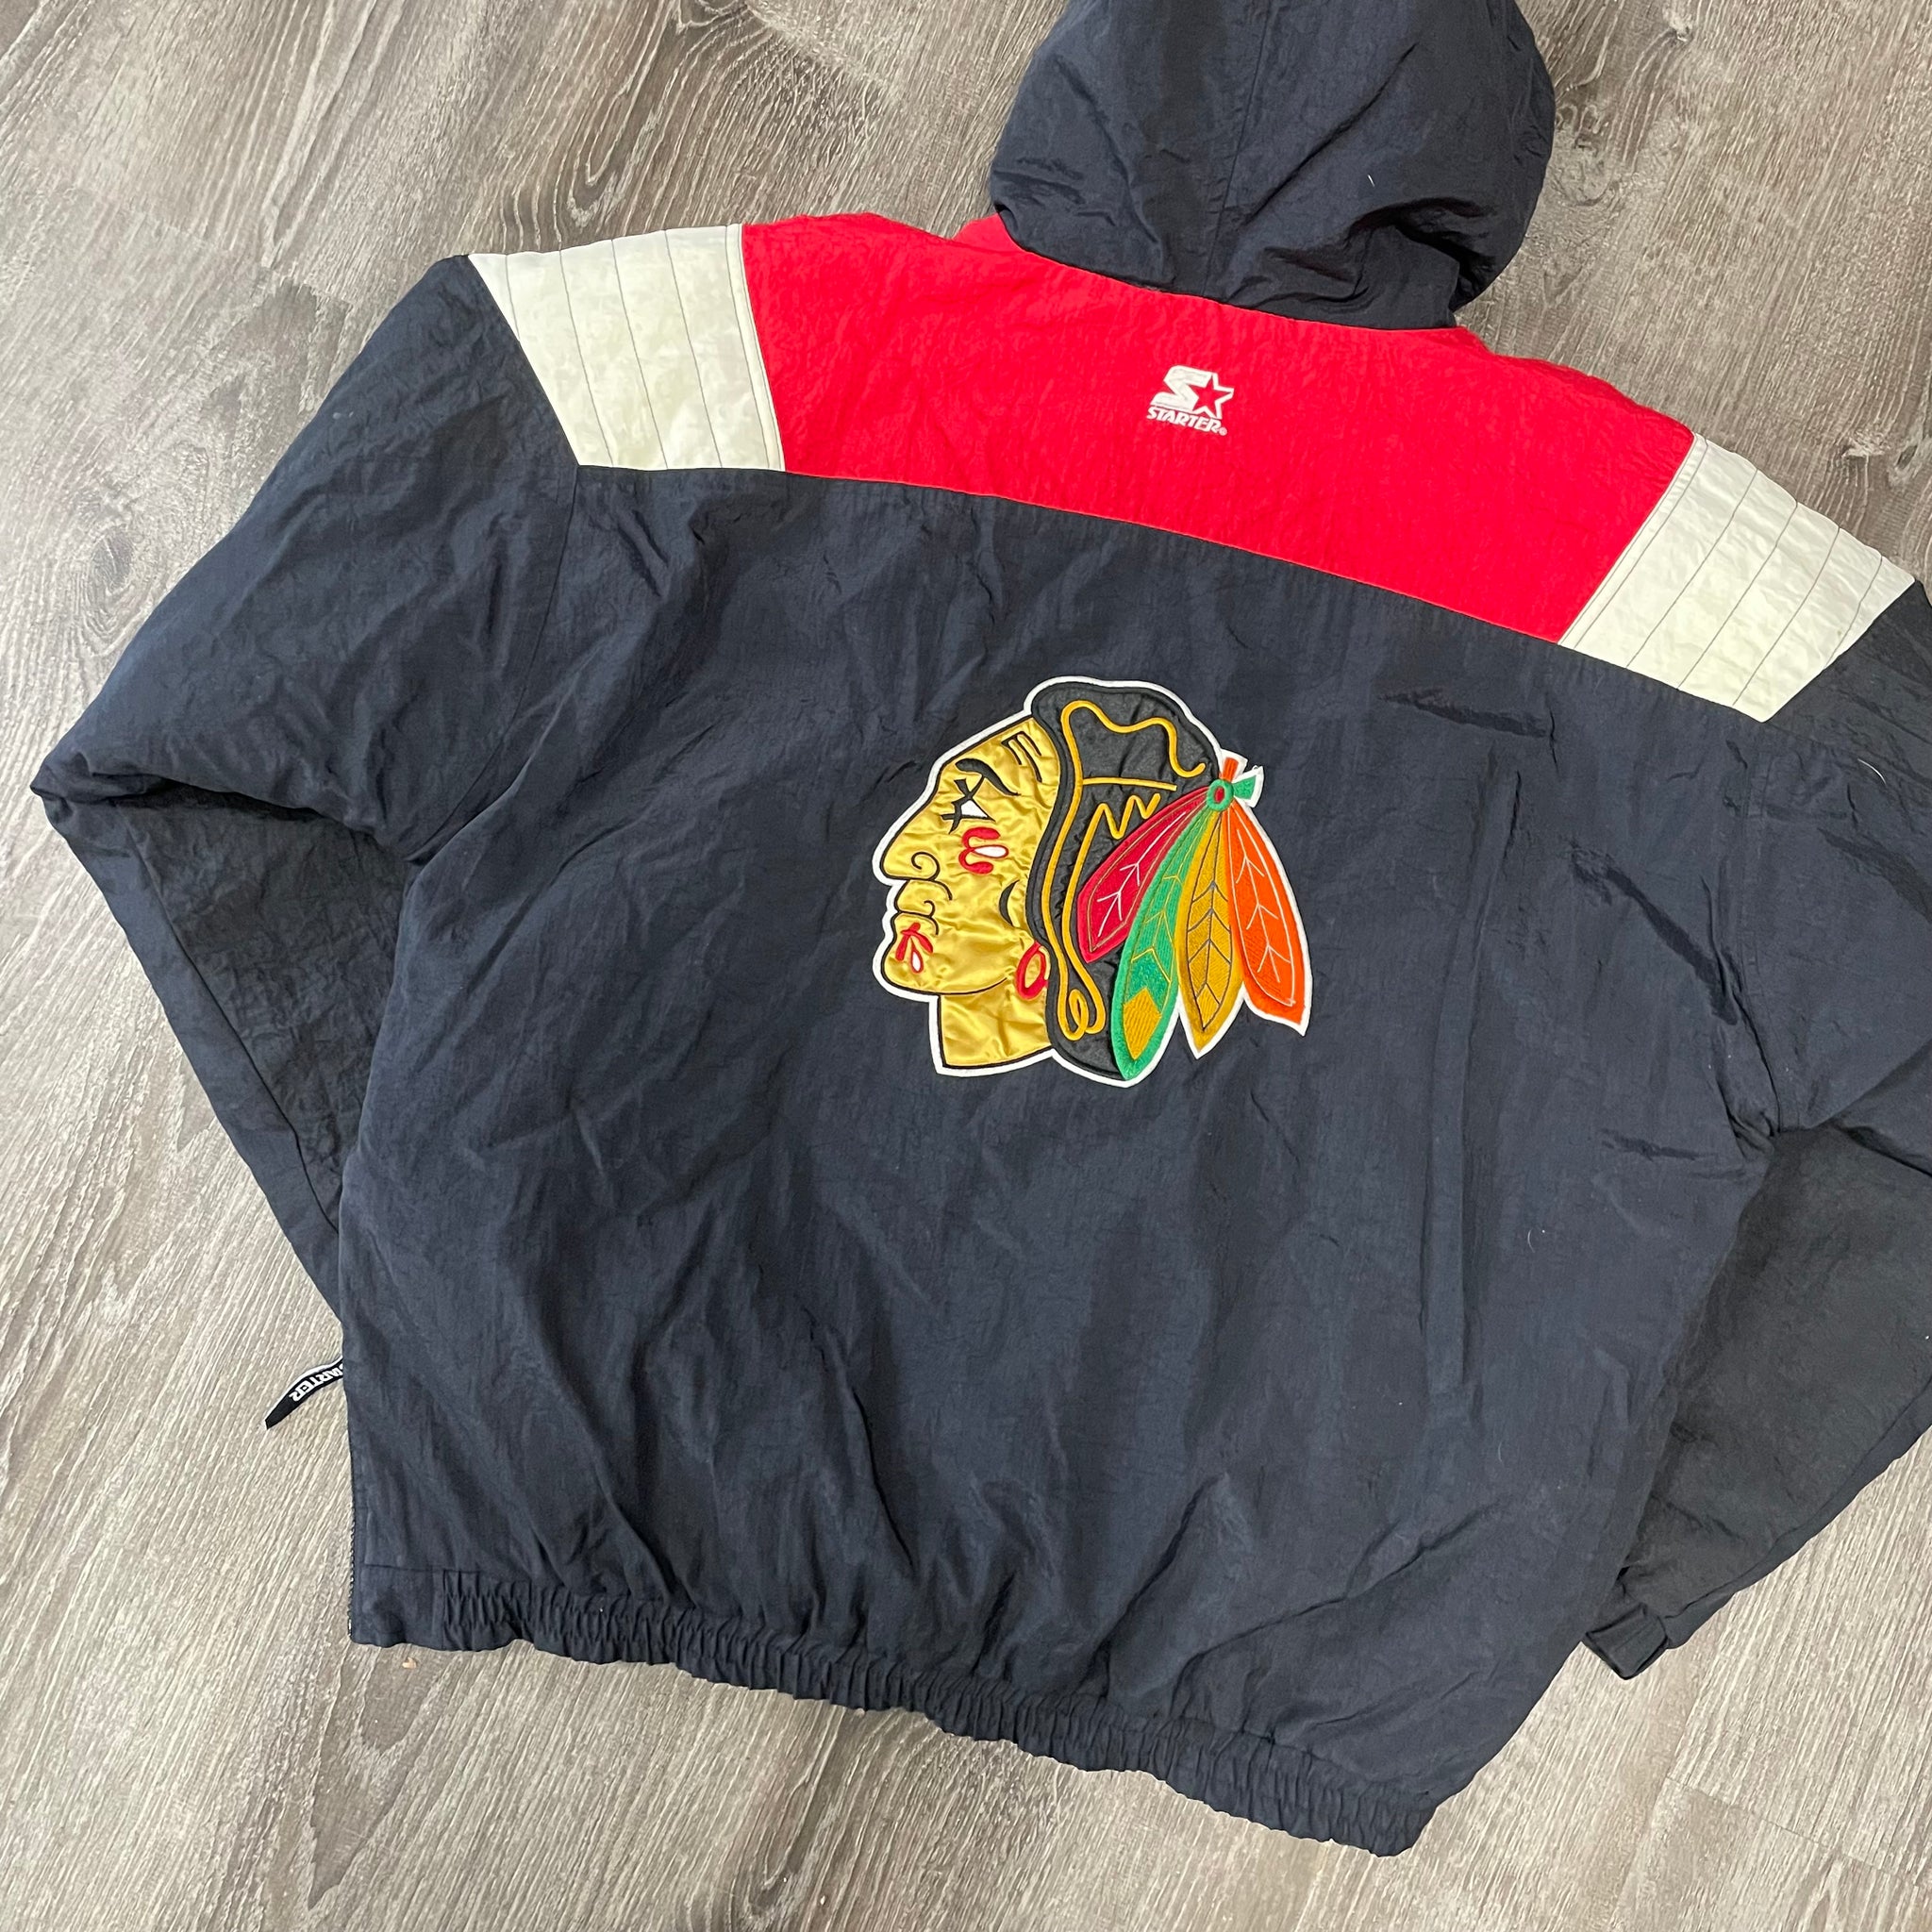 Vintage NHL Chicago Blackhawks Jersey - Men's XL